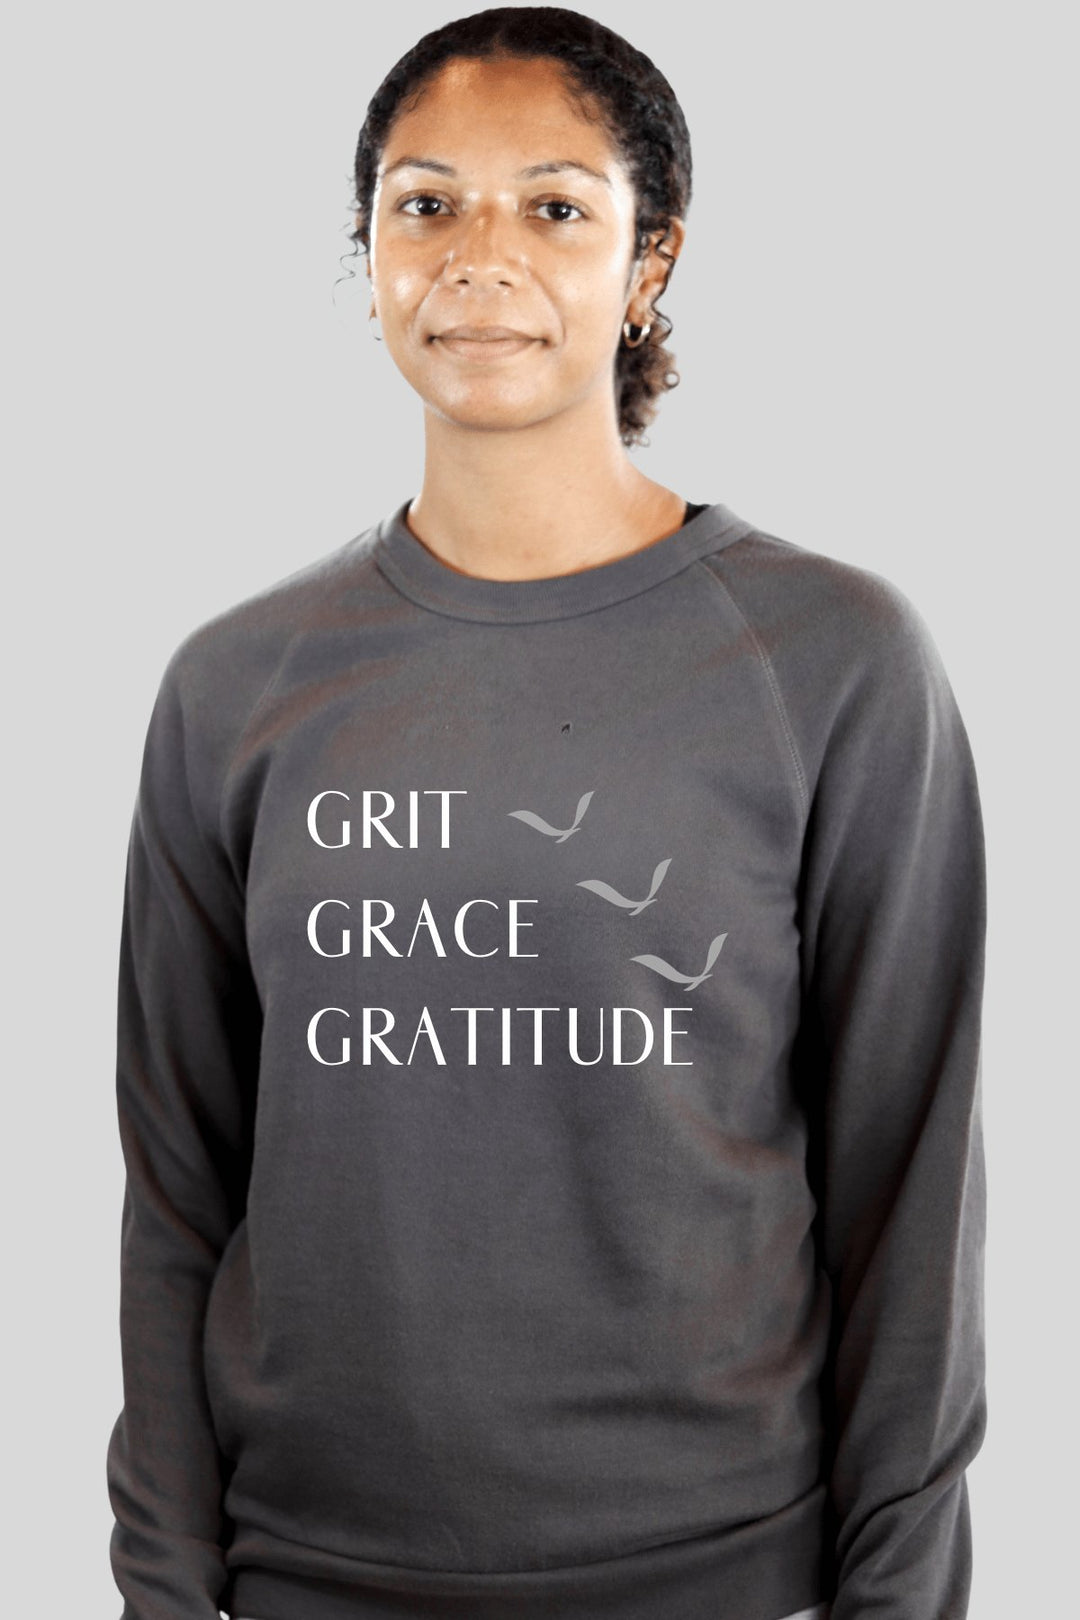 Grit Grace Gratitude Sweatshirt - Koala Clip